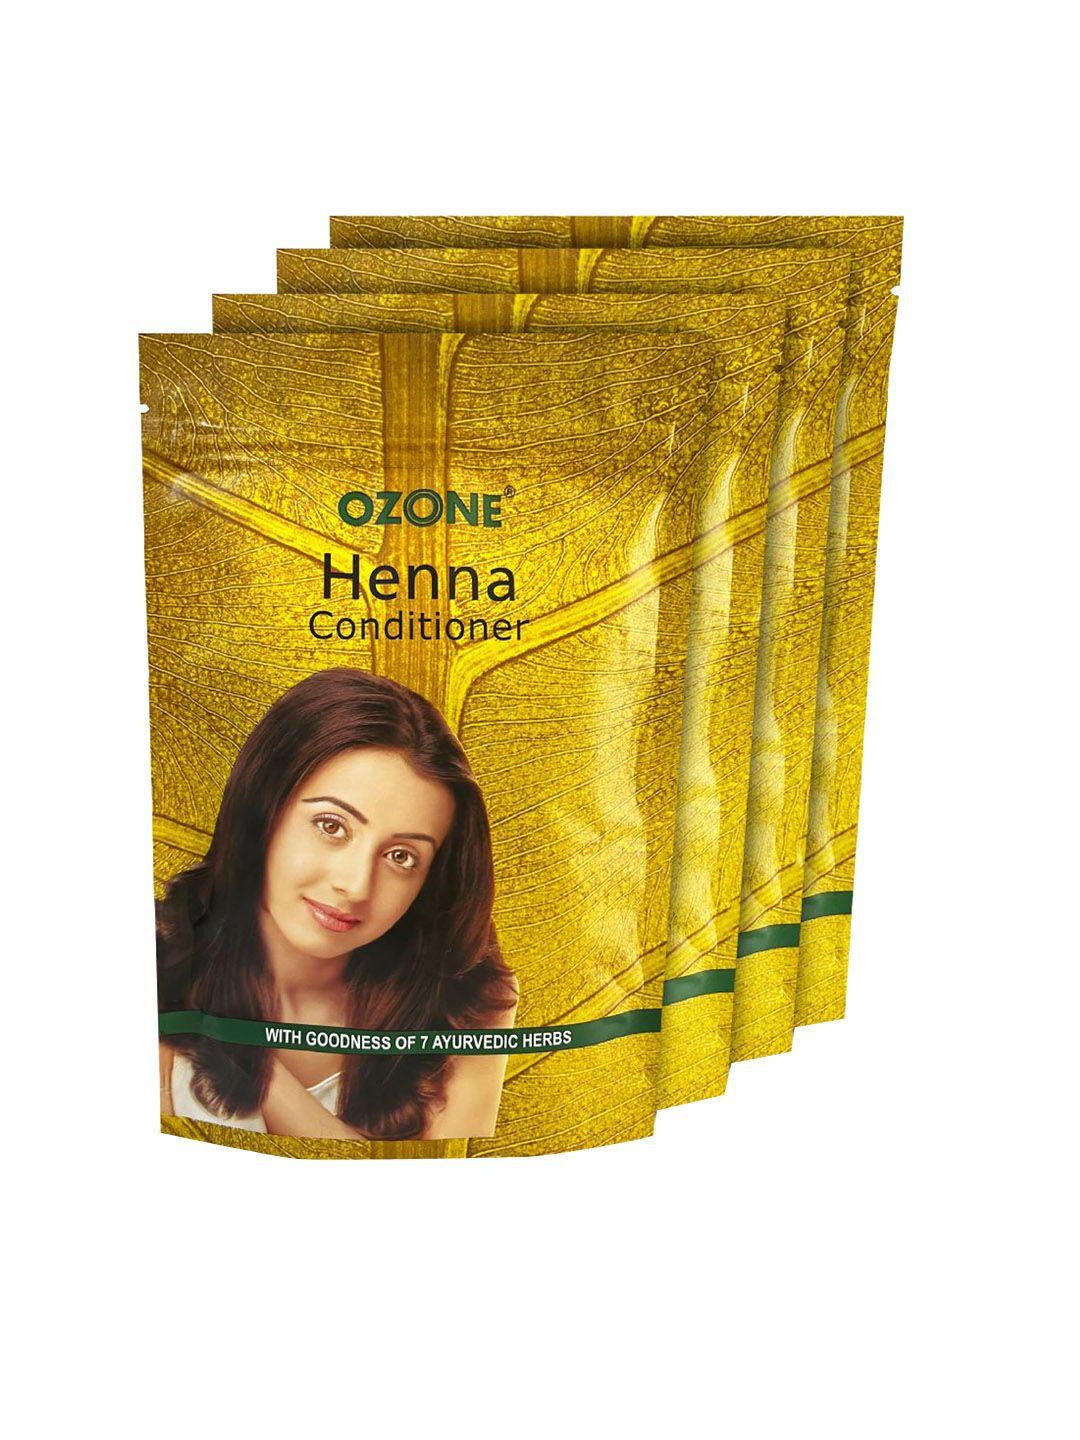 ozone set of 4 100% organic henna conditioner mehndi with 7 ayurvedic herbs - 200g each